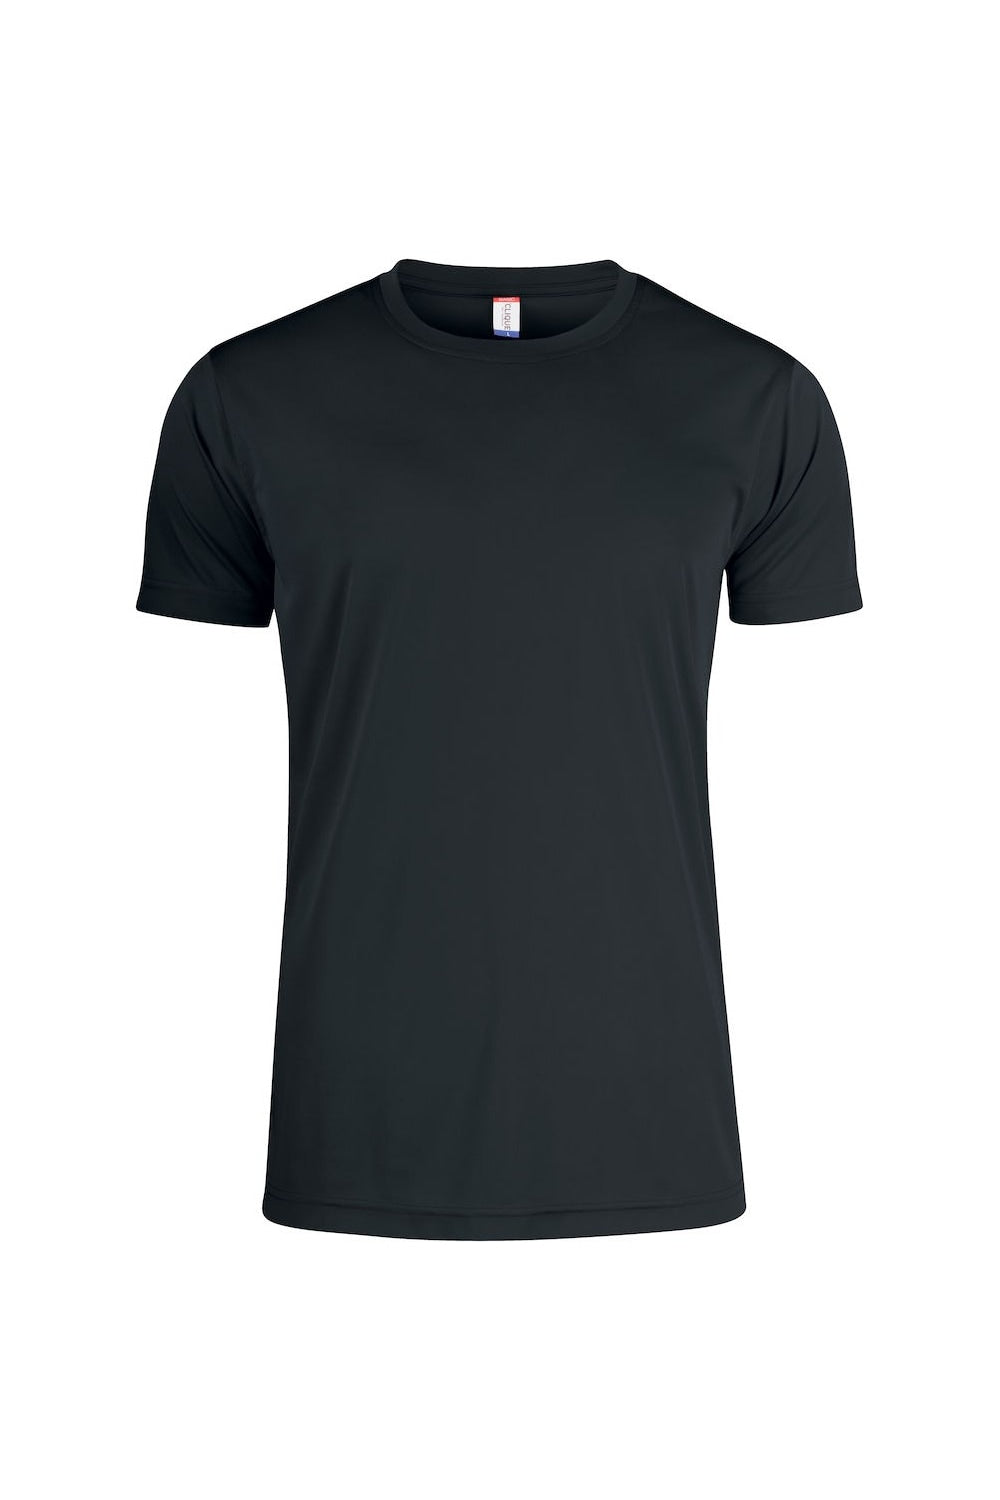 Childrens/Kids Basic Active T-Shirt - Black